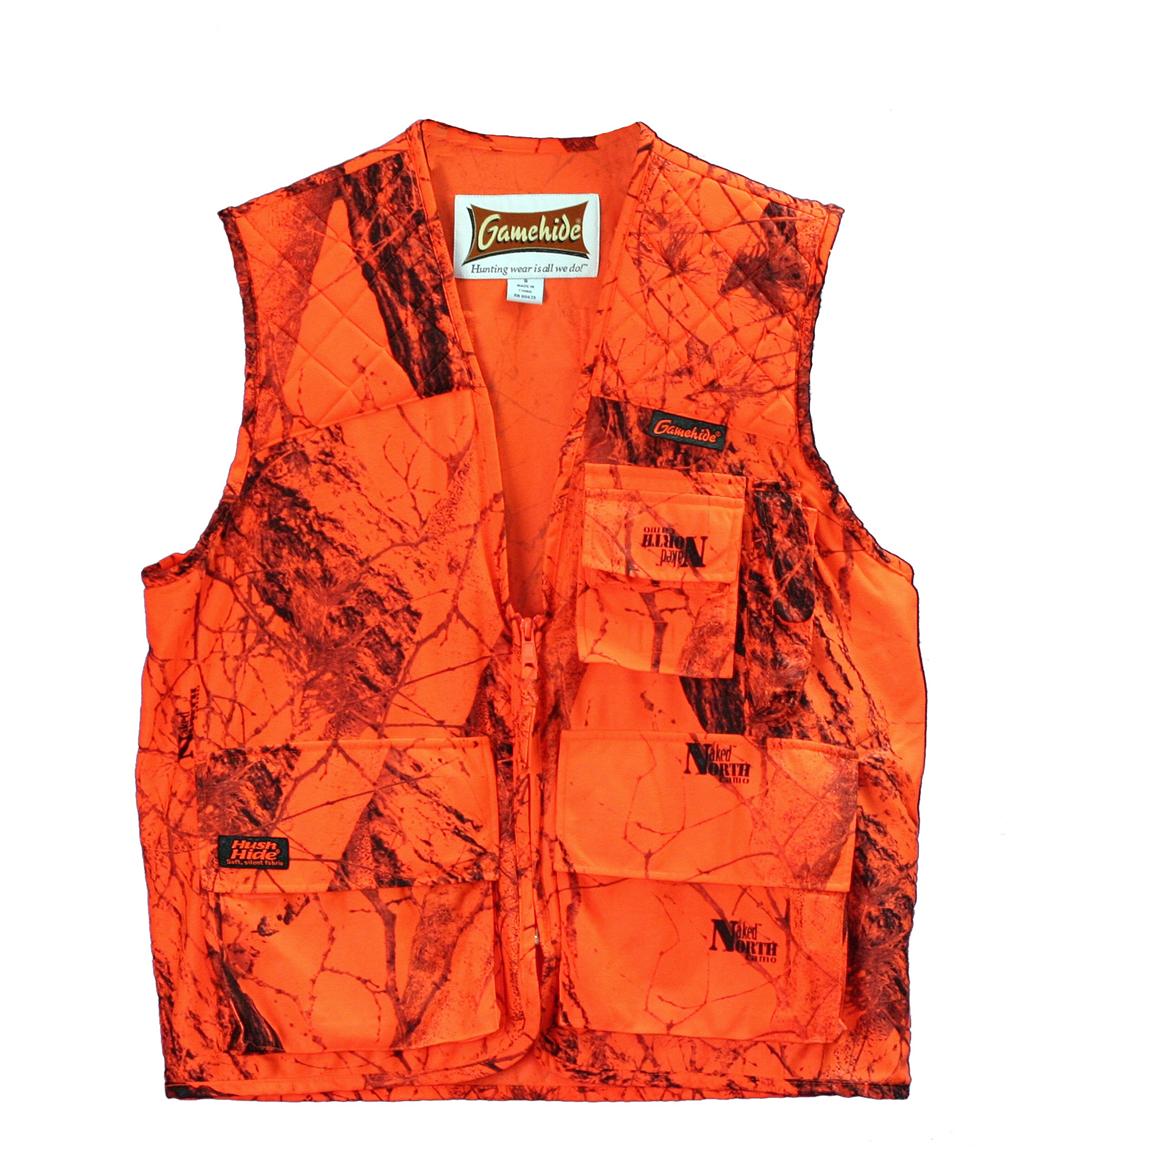 Gamehide® Sneaker Vest Naked North Blaze Camo 425415 Blaze Orange